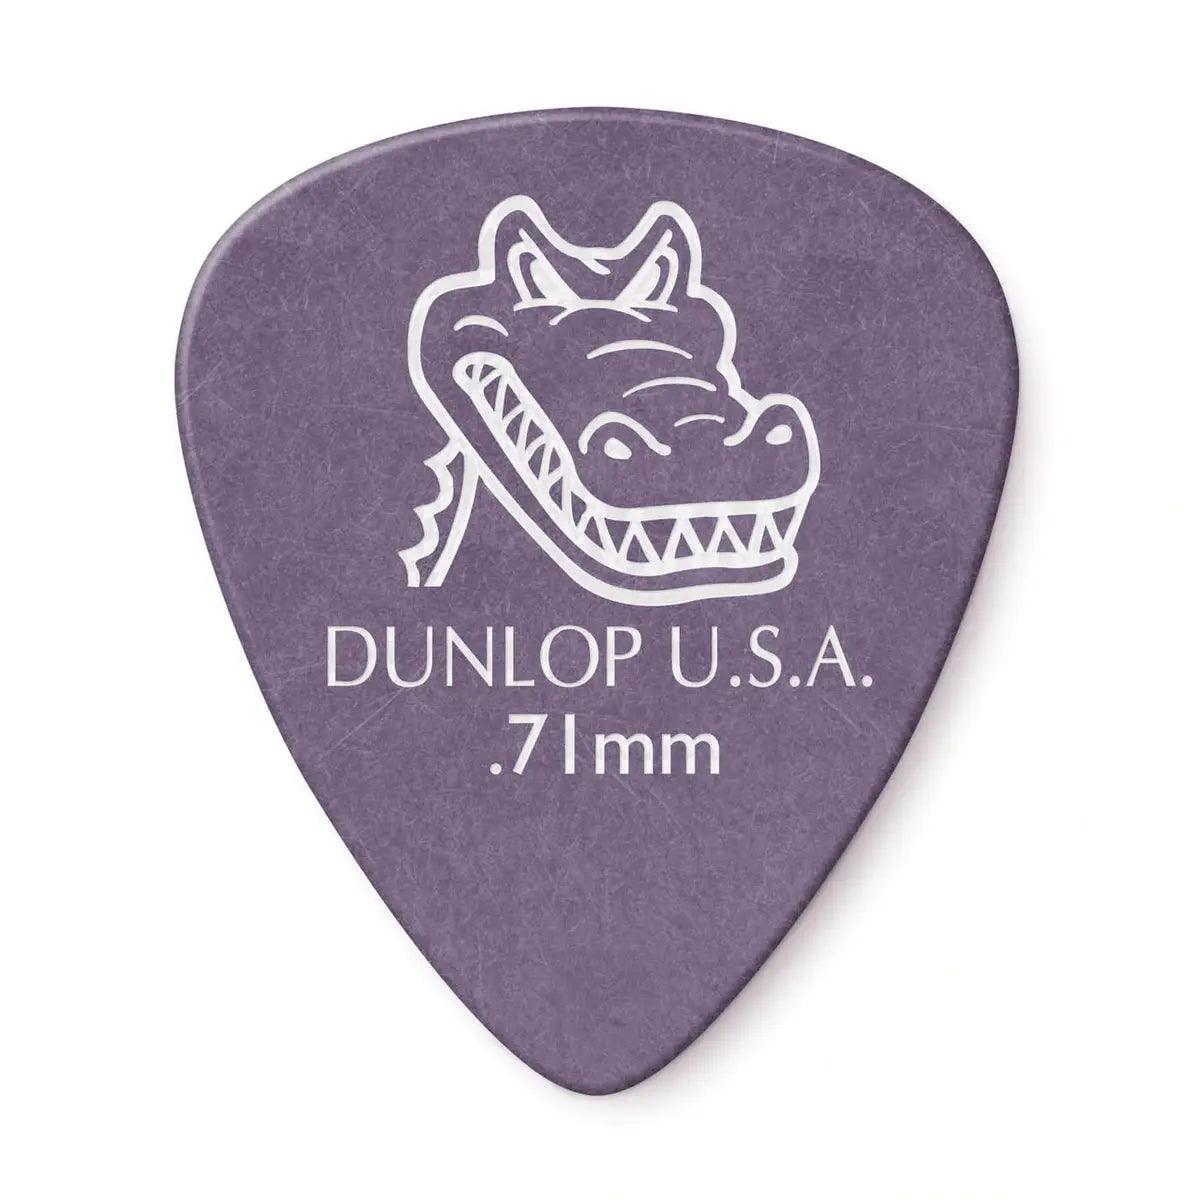 0.71mm Pick Player Pack Gator Grip - Guitars - Picks by Jim Dunlop at Muso's Stuff